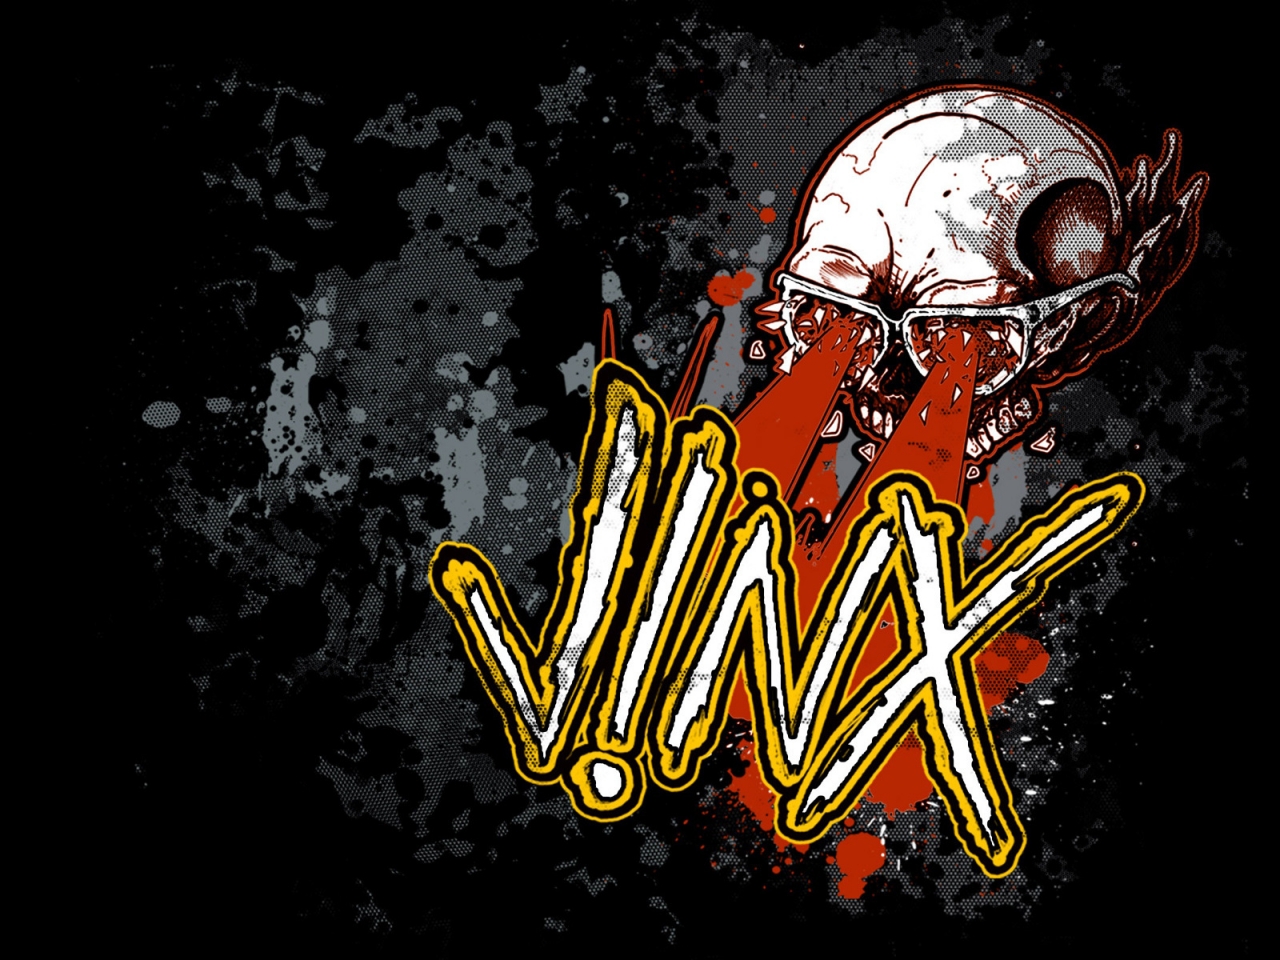 Skull Vinx for 1280 x 960 resolution